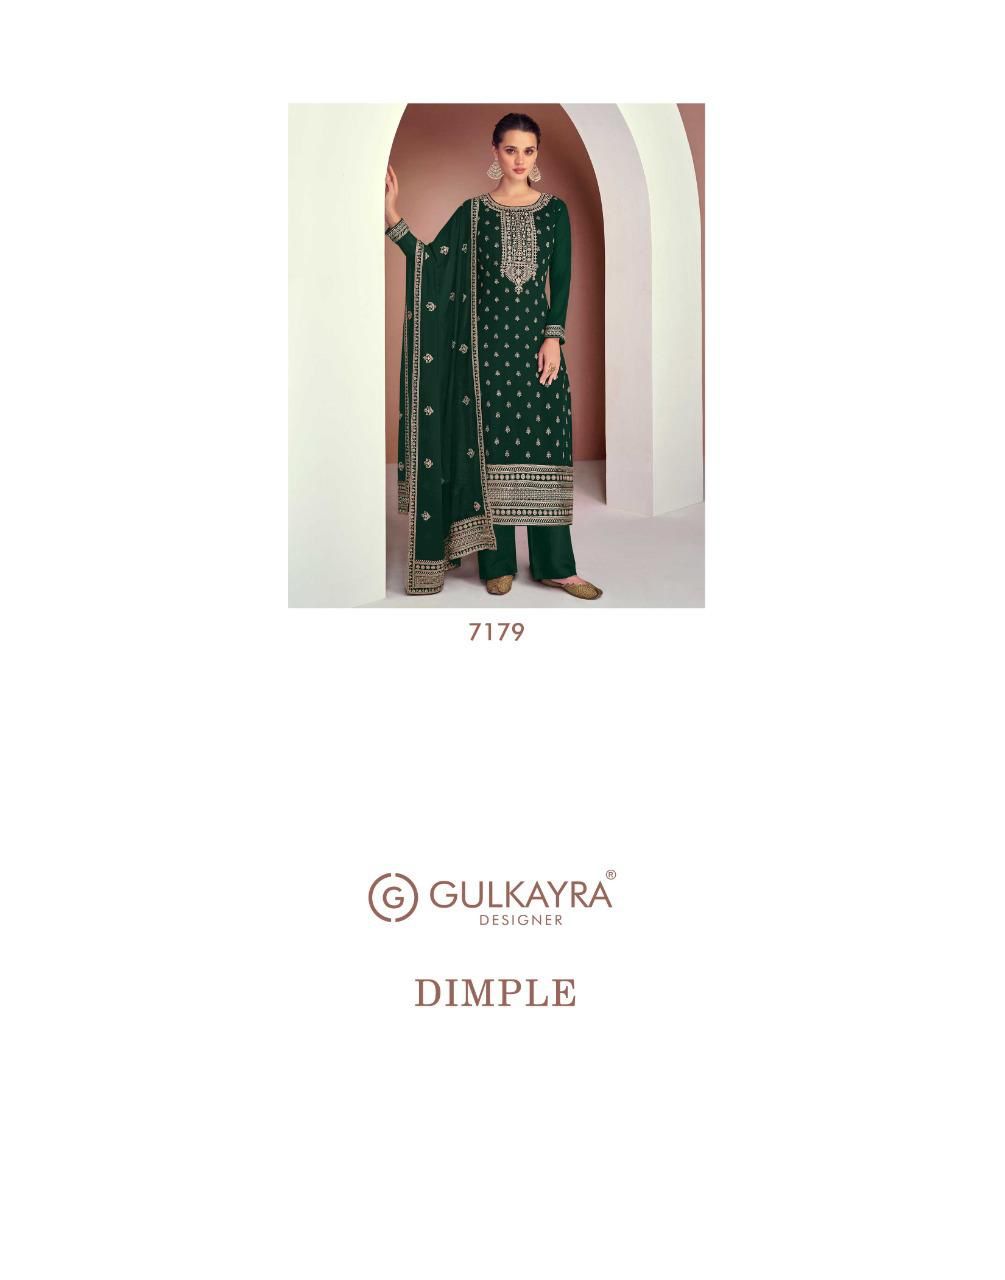 Gulkayra Dimple collection 8